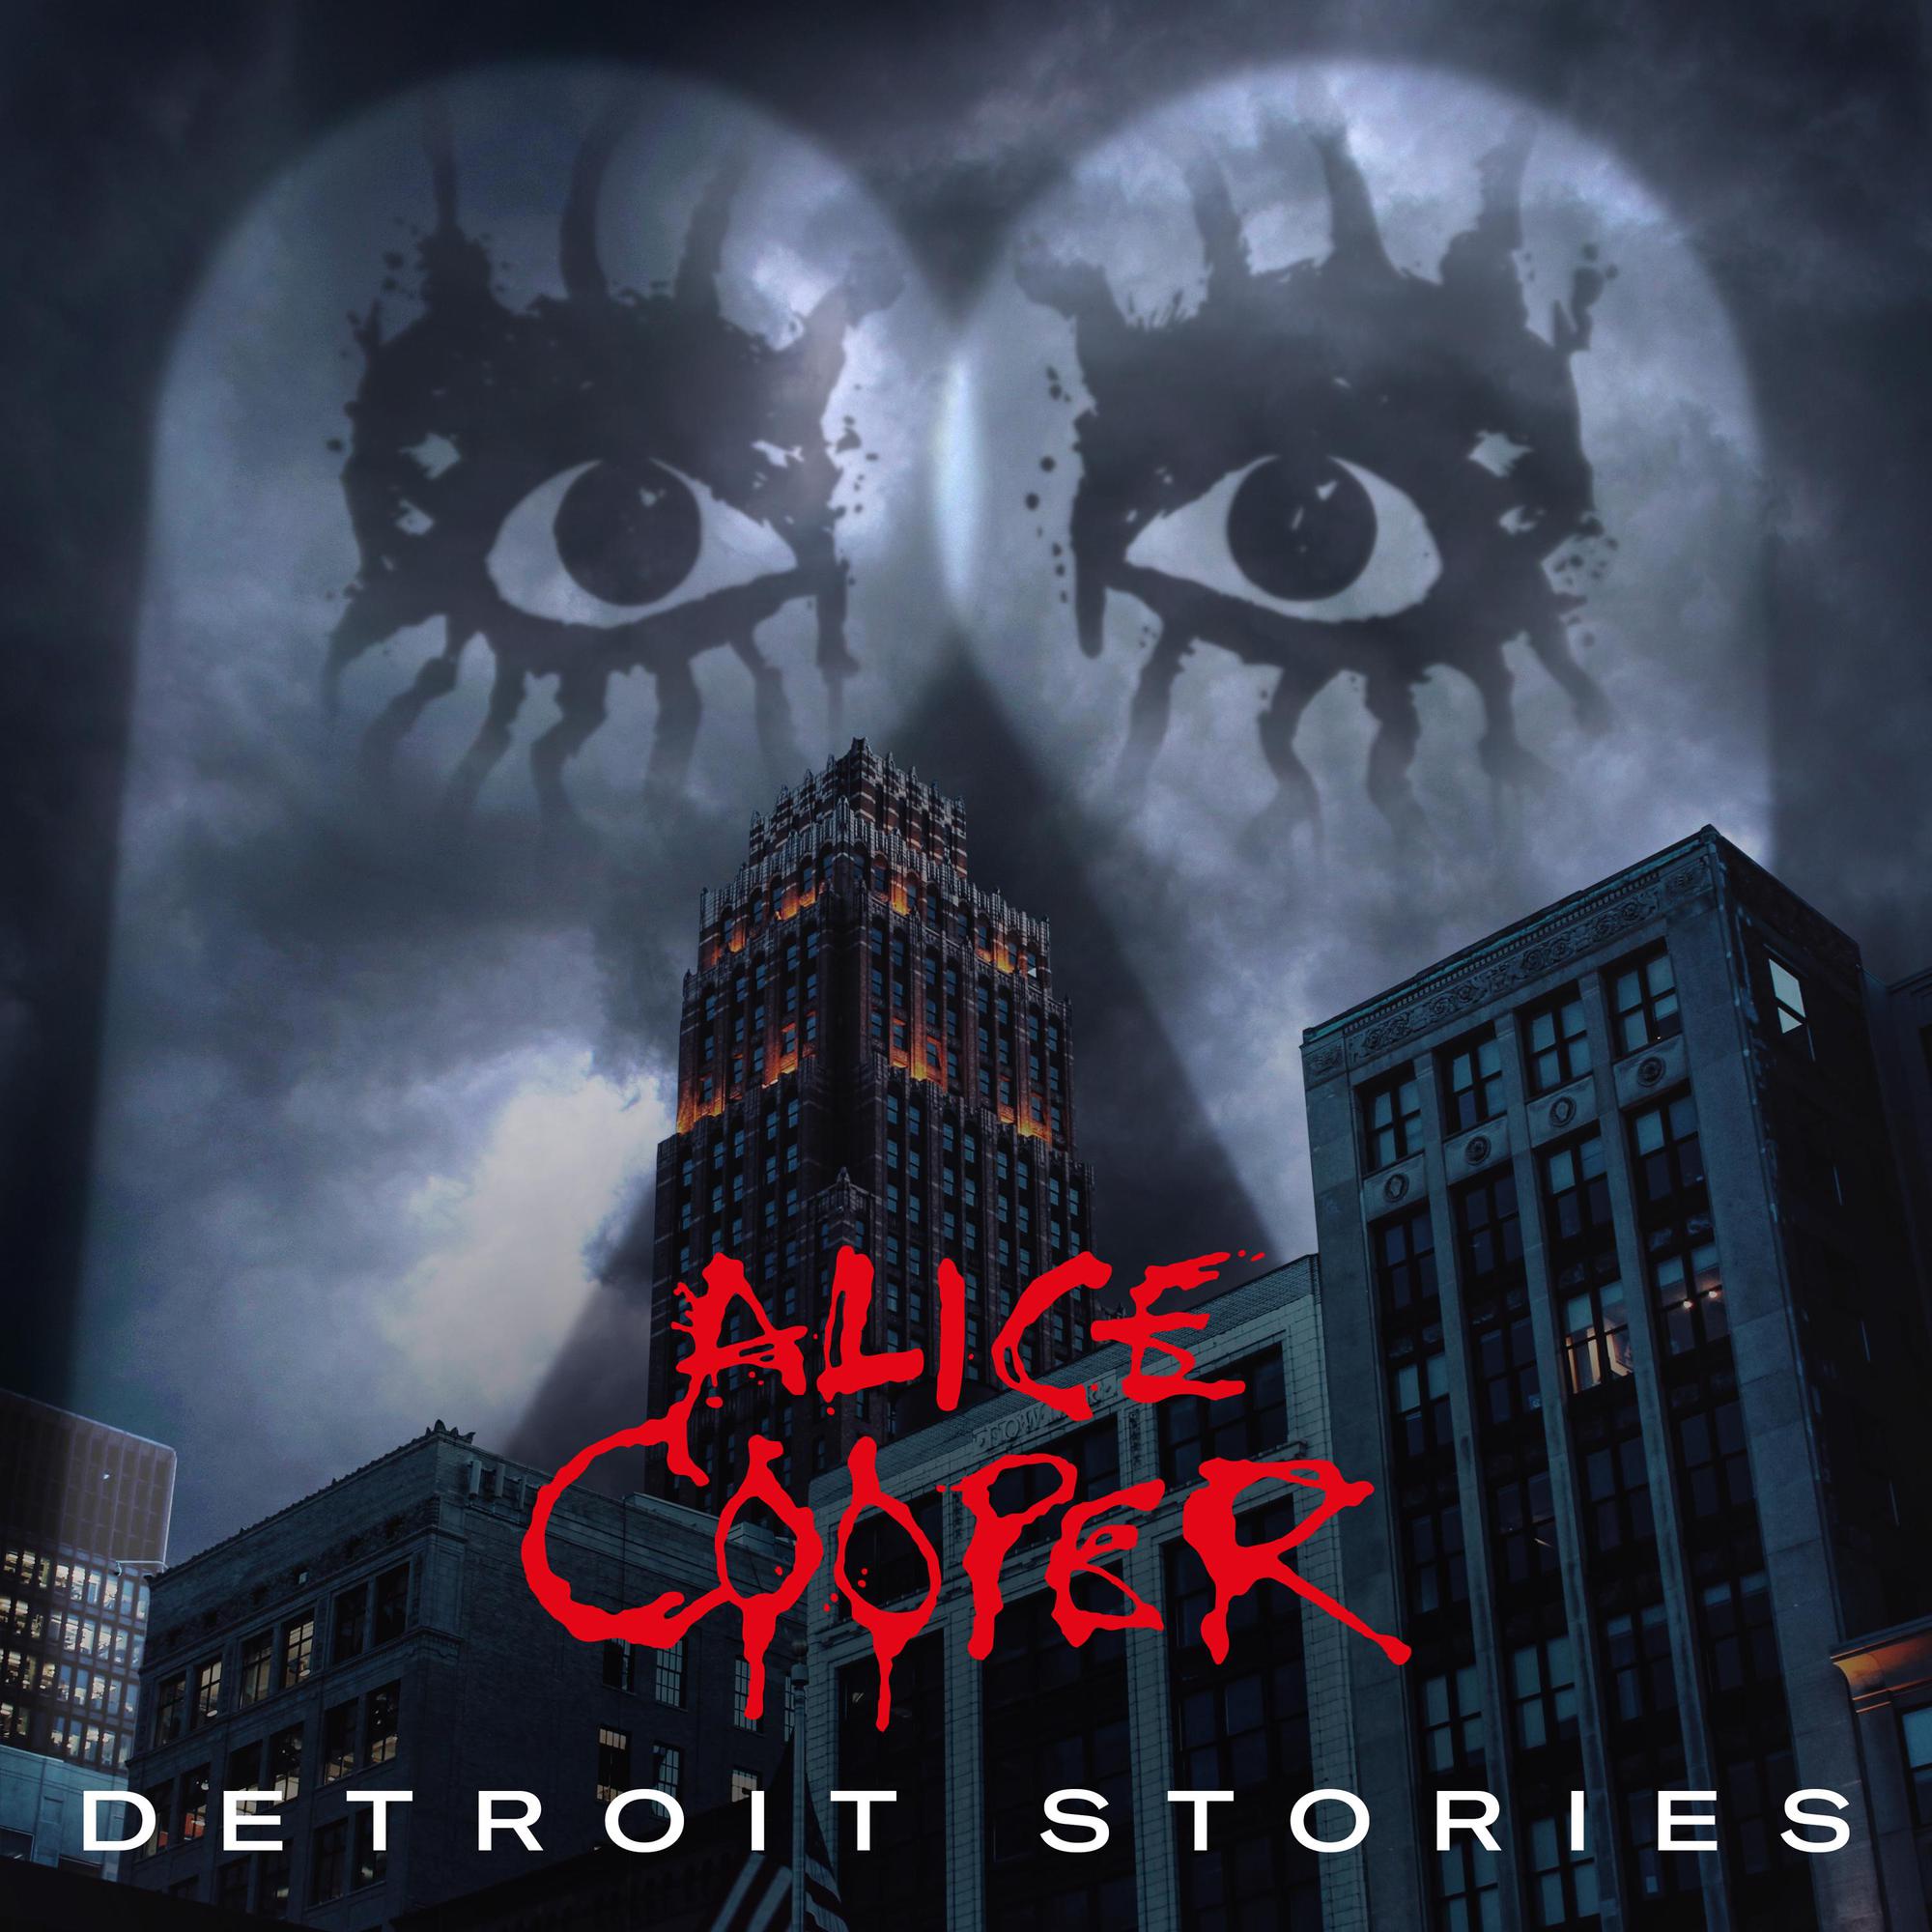 ALICE COOPER 'DETROIT STORIES' 2LP (Limited Edition Picture Disc)